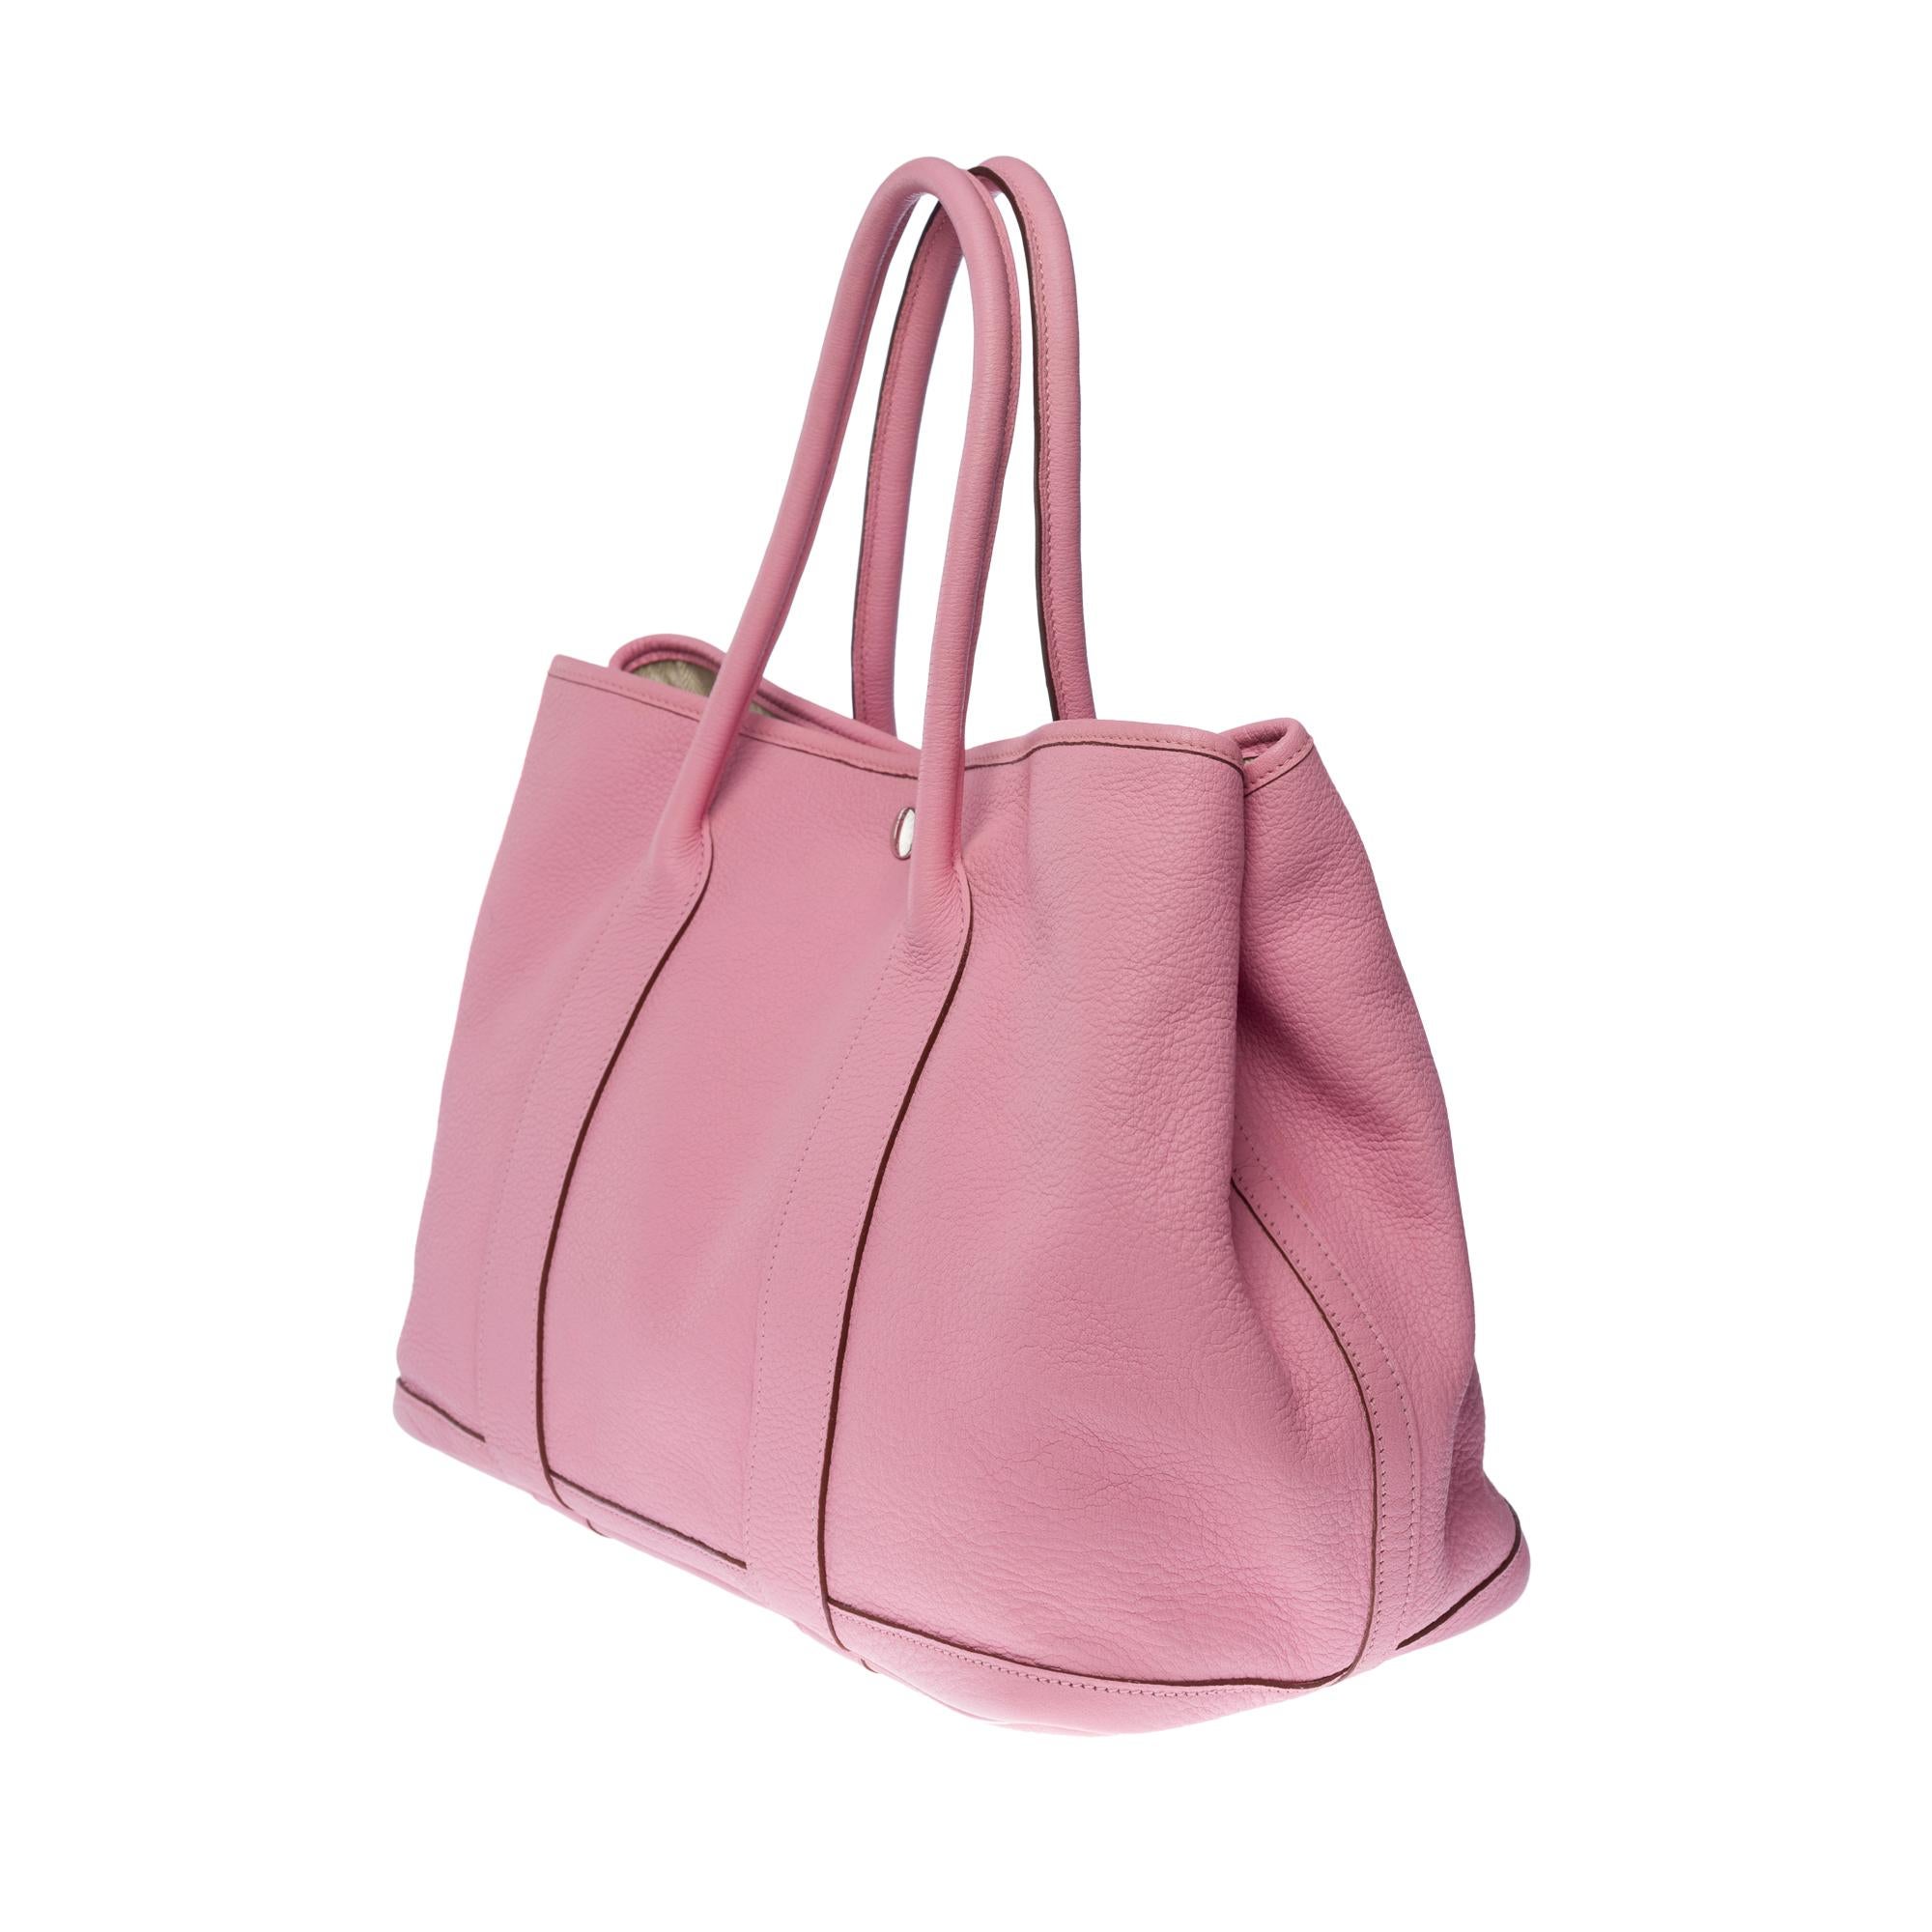 Women's Gorgeous Hermès Garden Party 36 Tote bag in Sakura Pink Negonda leather, SHW